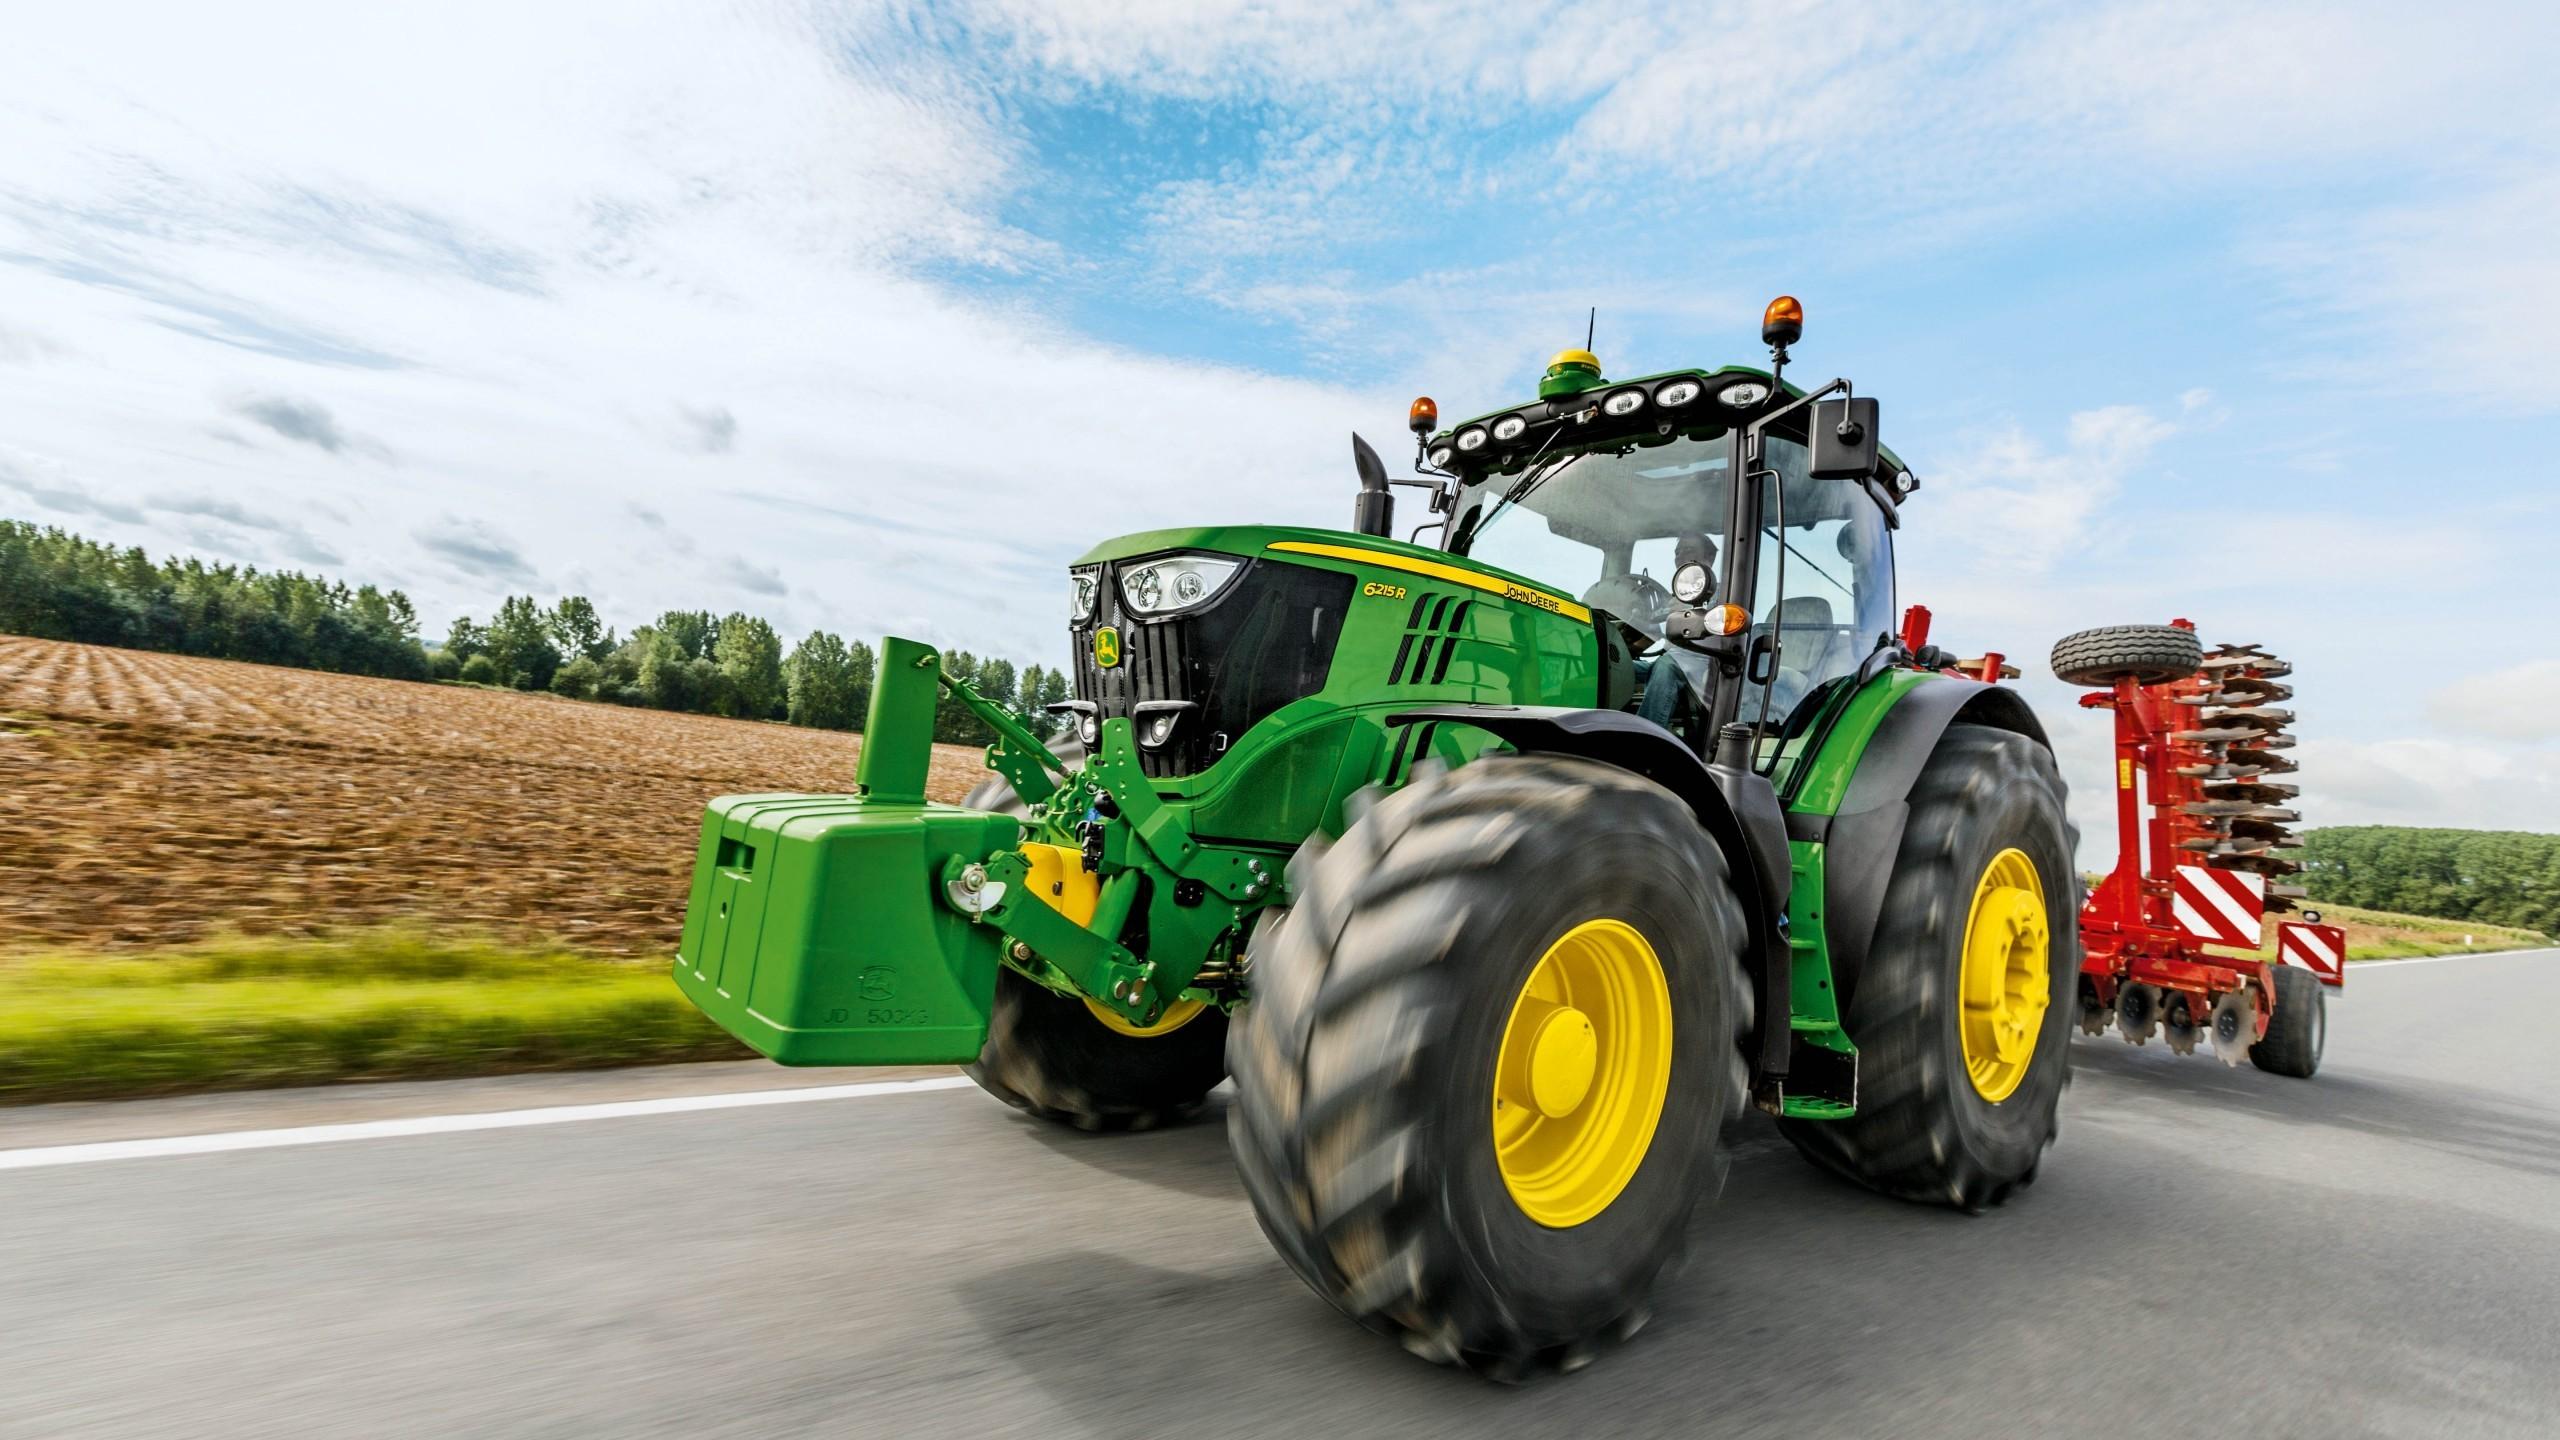 Download 2560x1440 Industrial, Tractor, Green, Road, Farm Wallpaper